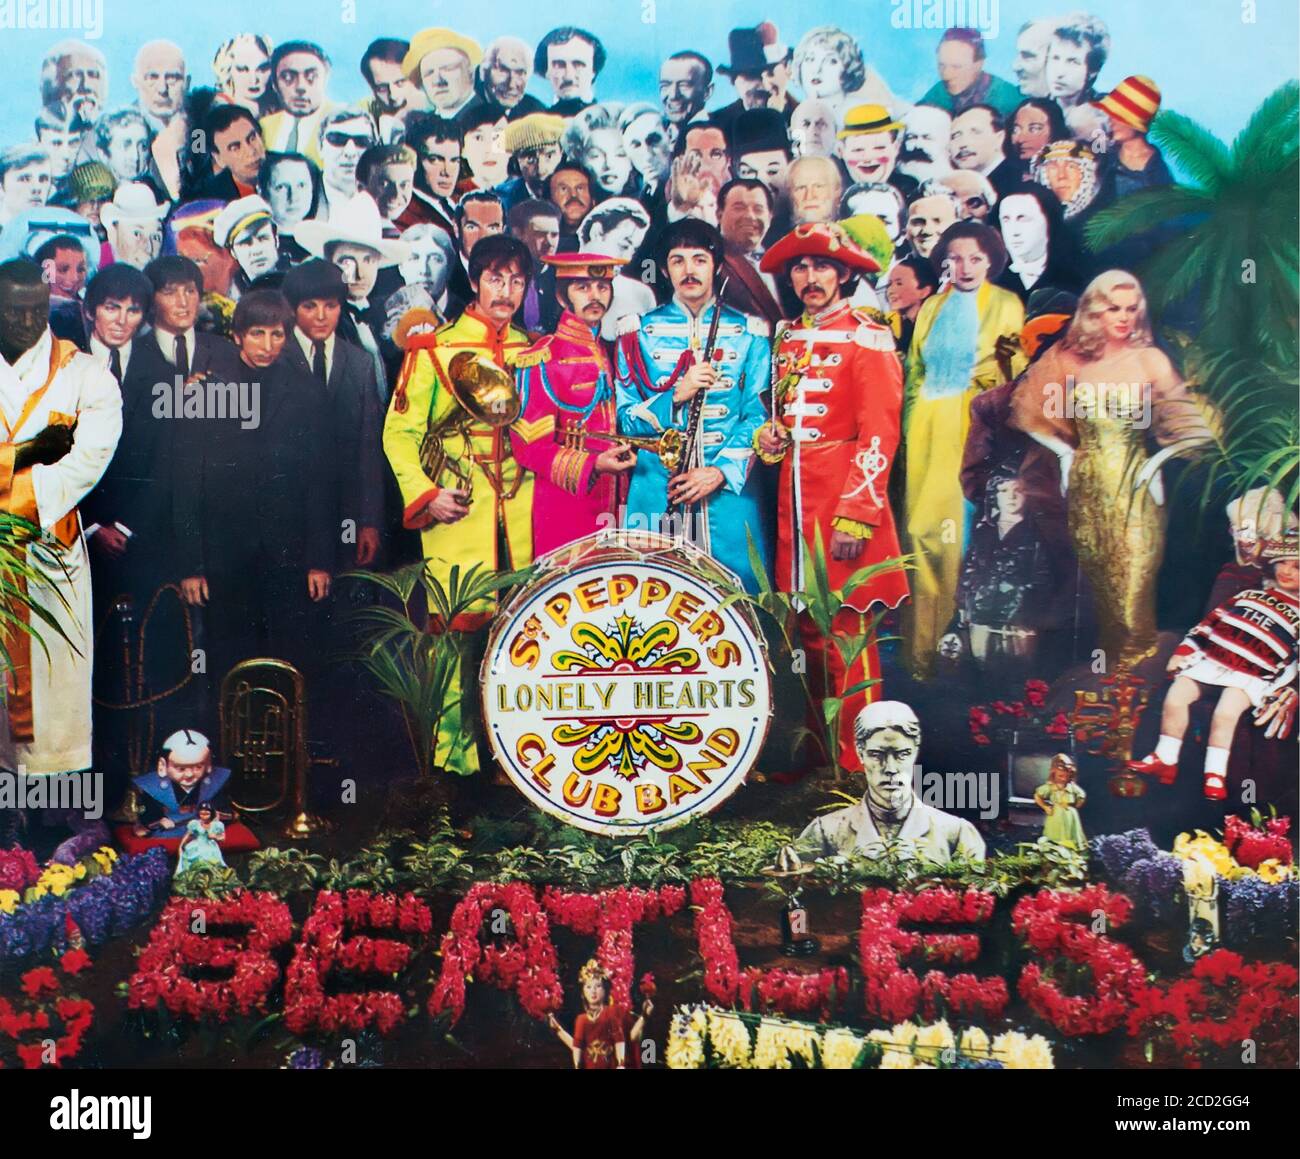 The Beatles For Sale Album Cover Fridge Magnet